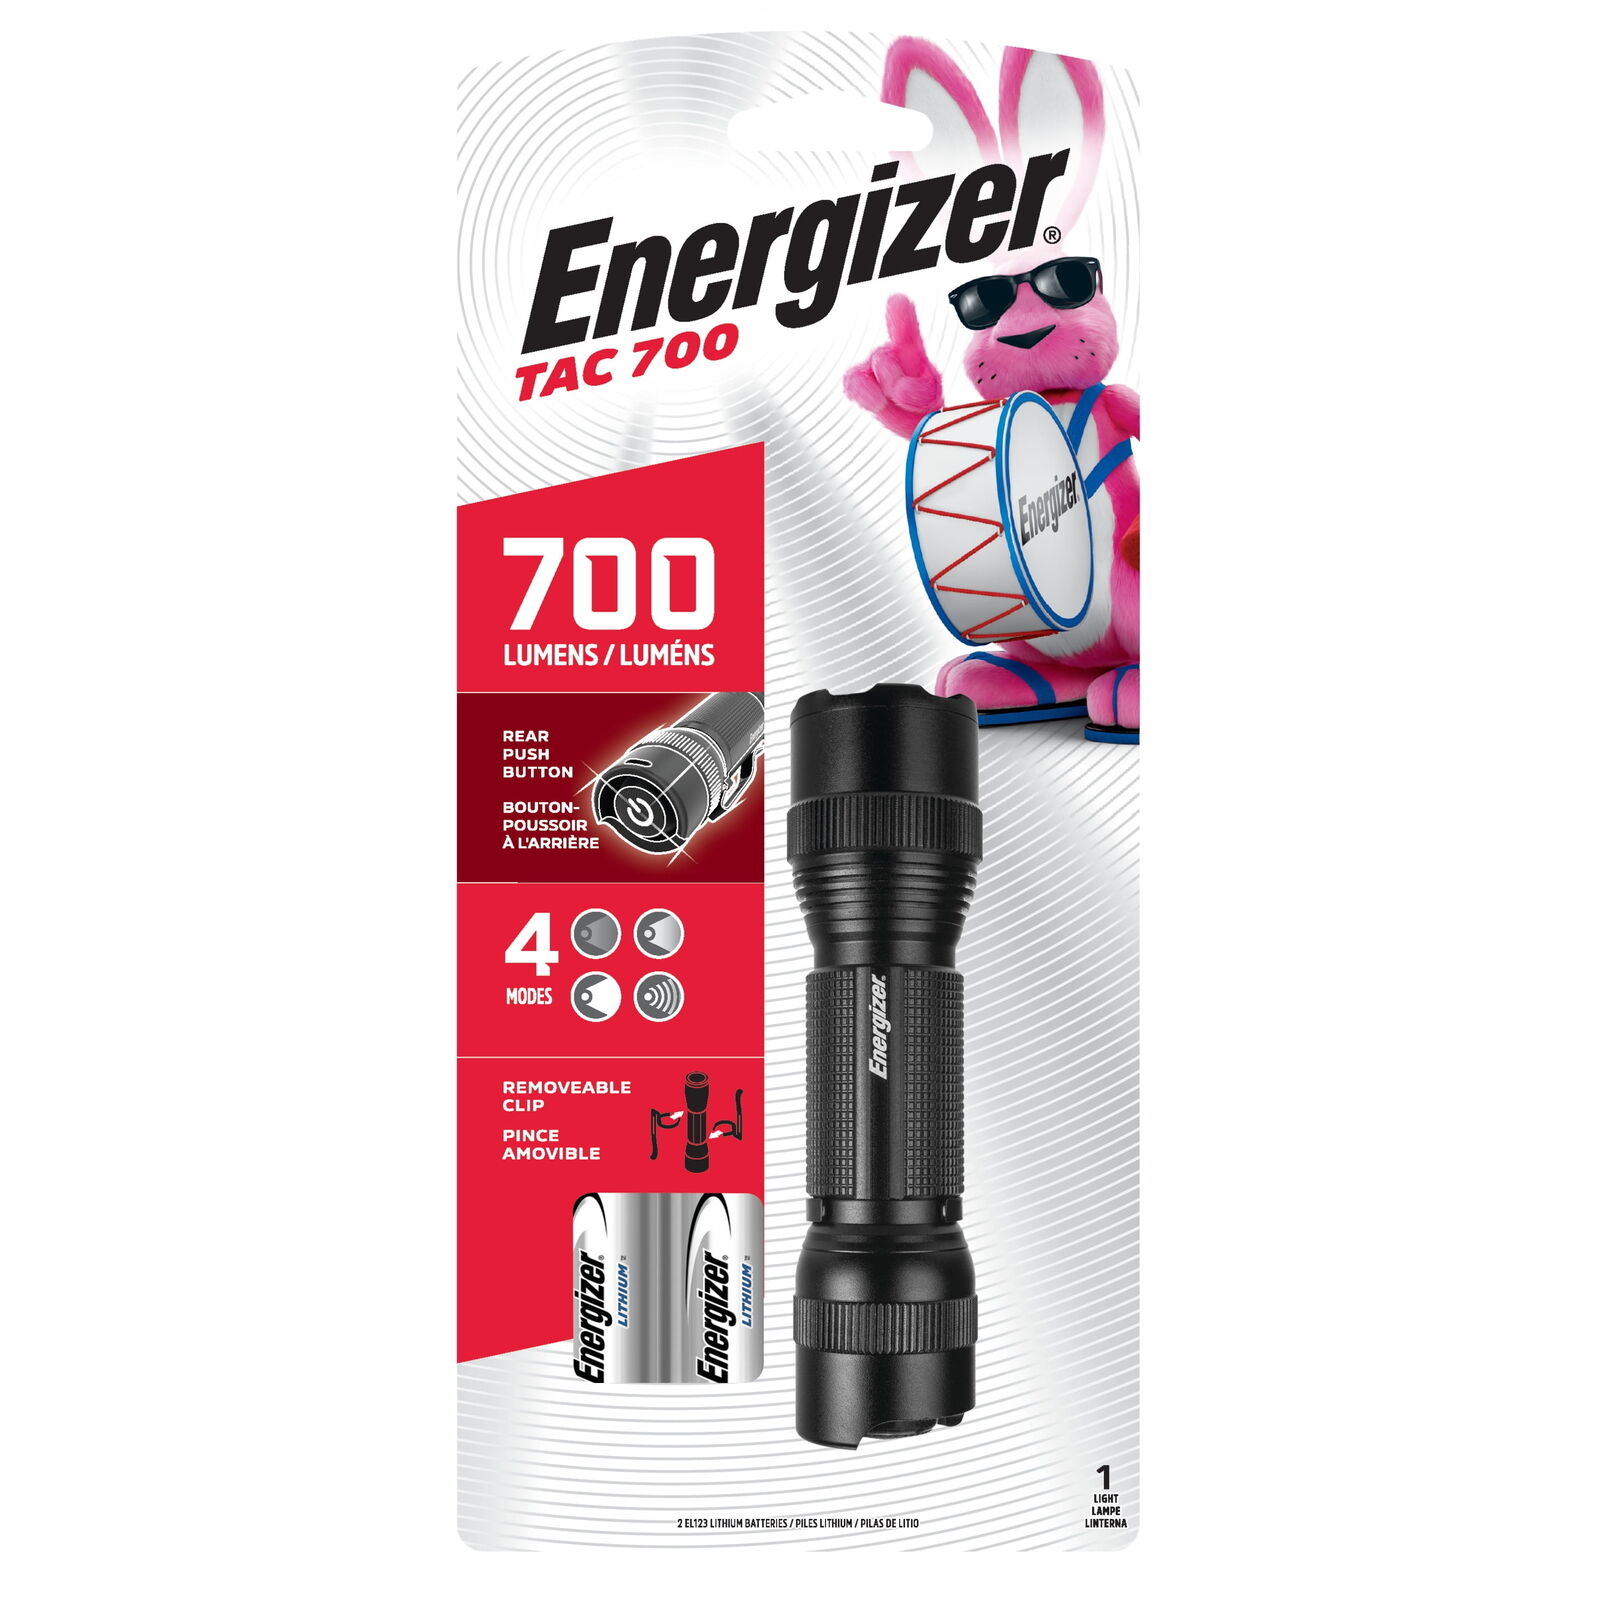 Energizer TAC 700 Metal LED Tactical Flashlight